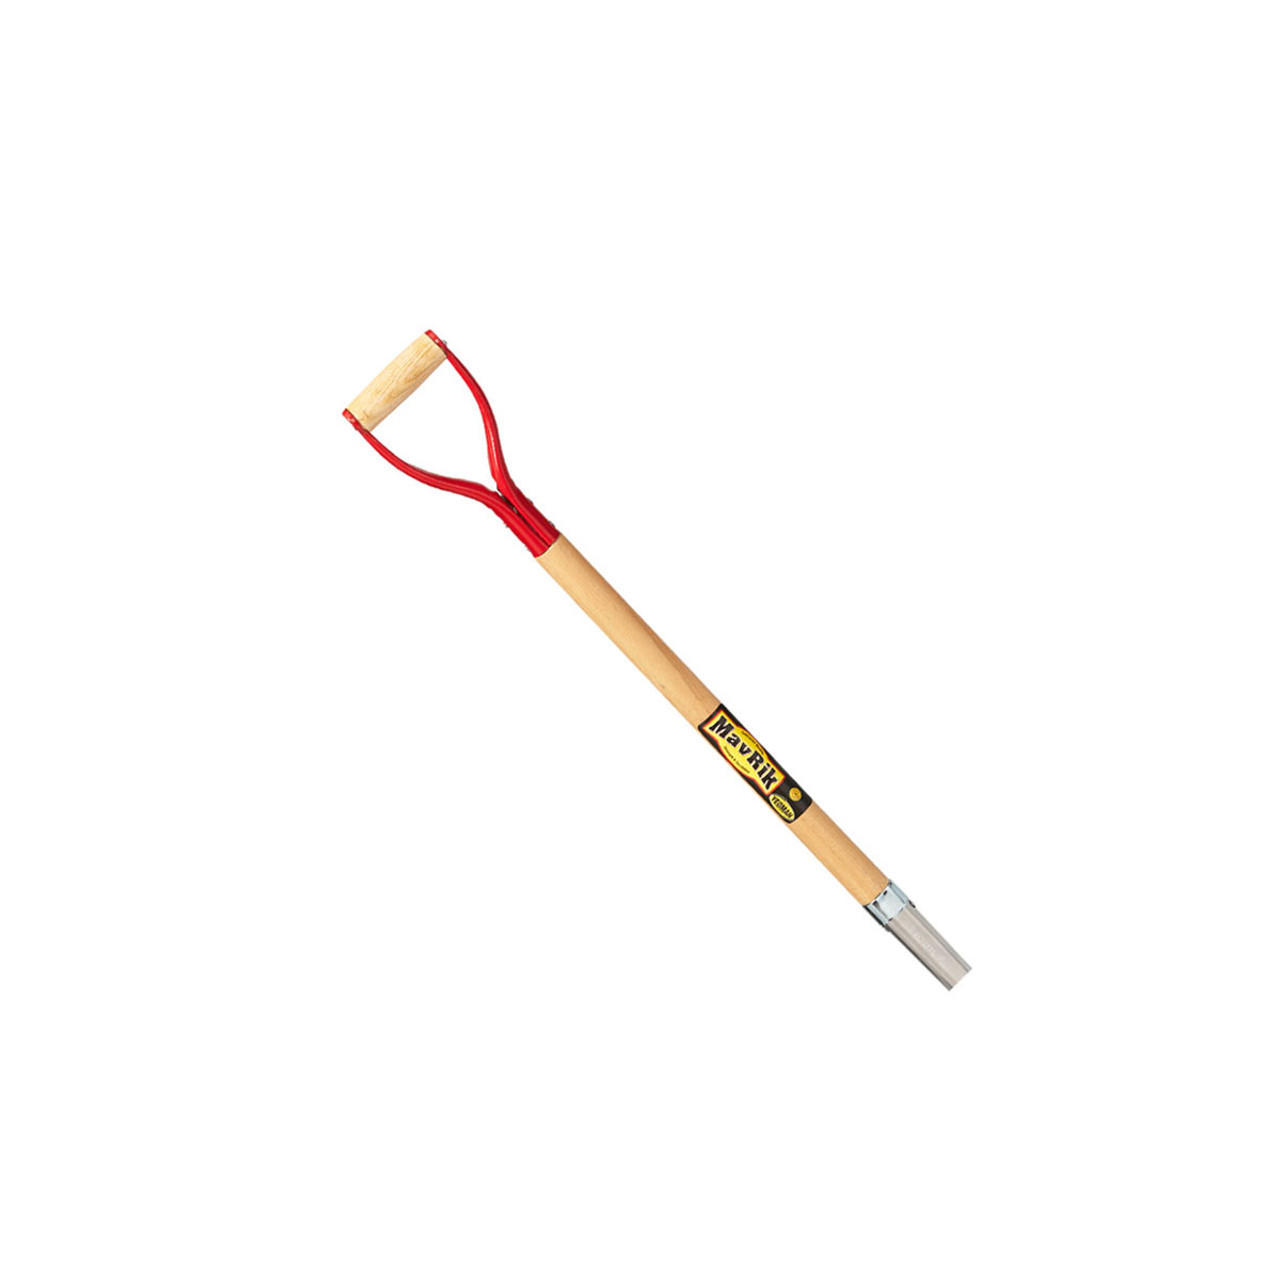 36" Replacement Hardwood Handle/Steel D for shovels/scoops